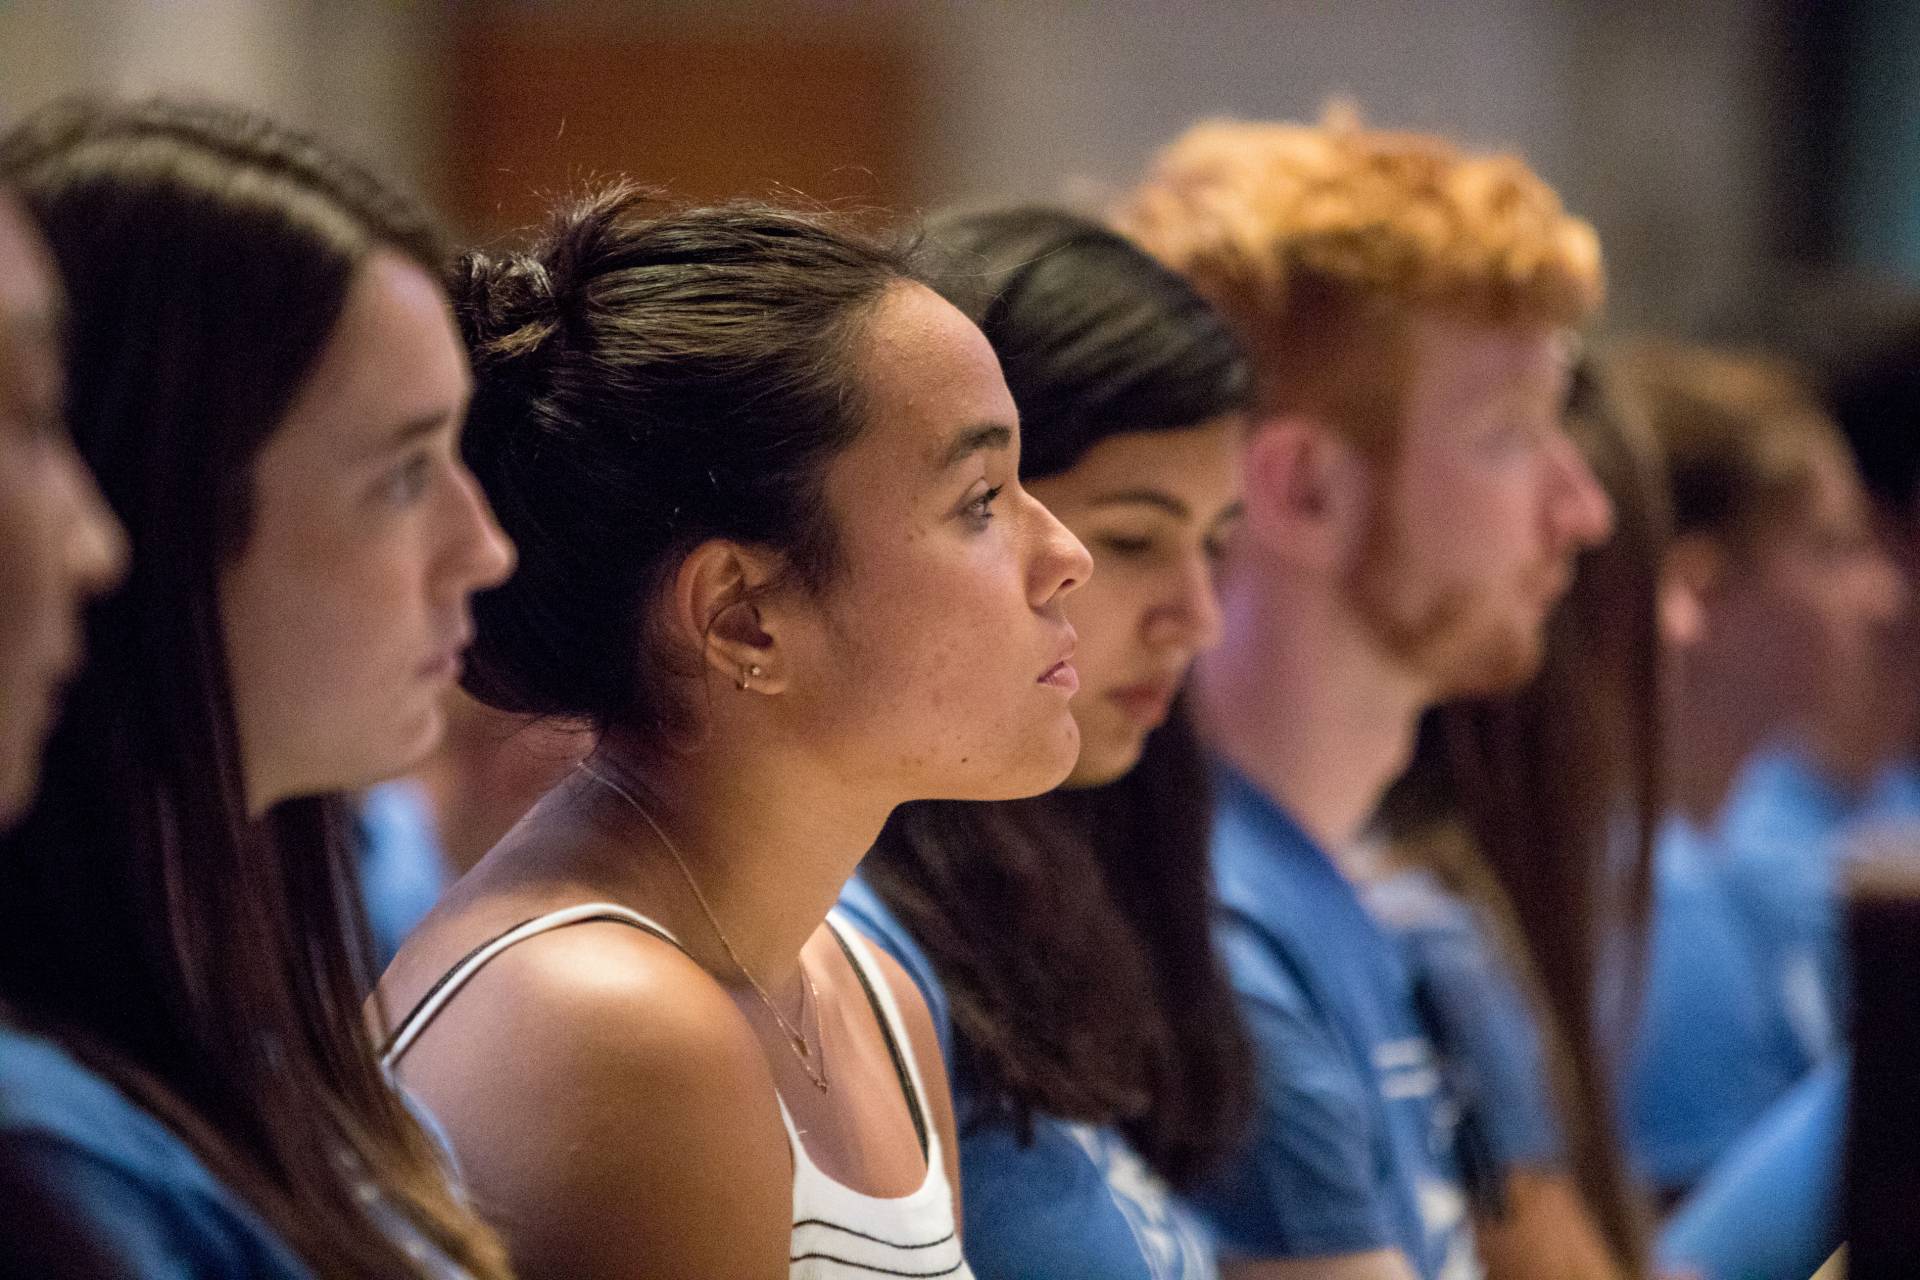 Students listening in Chapel